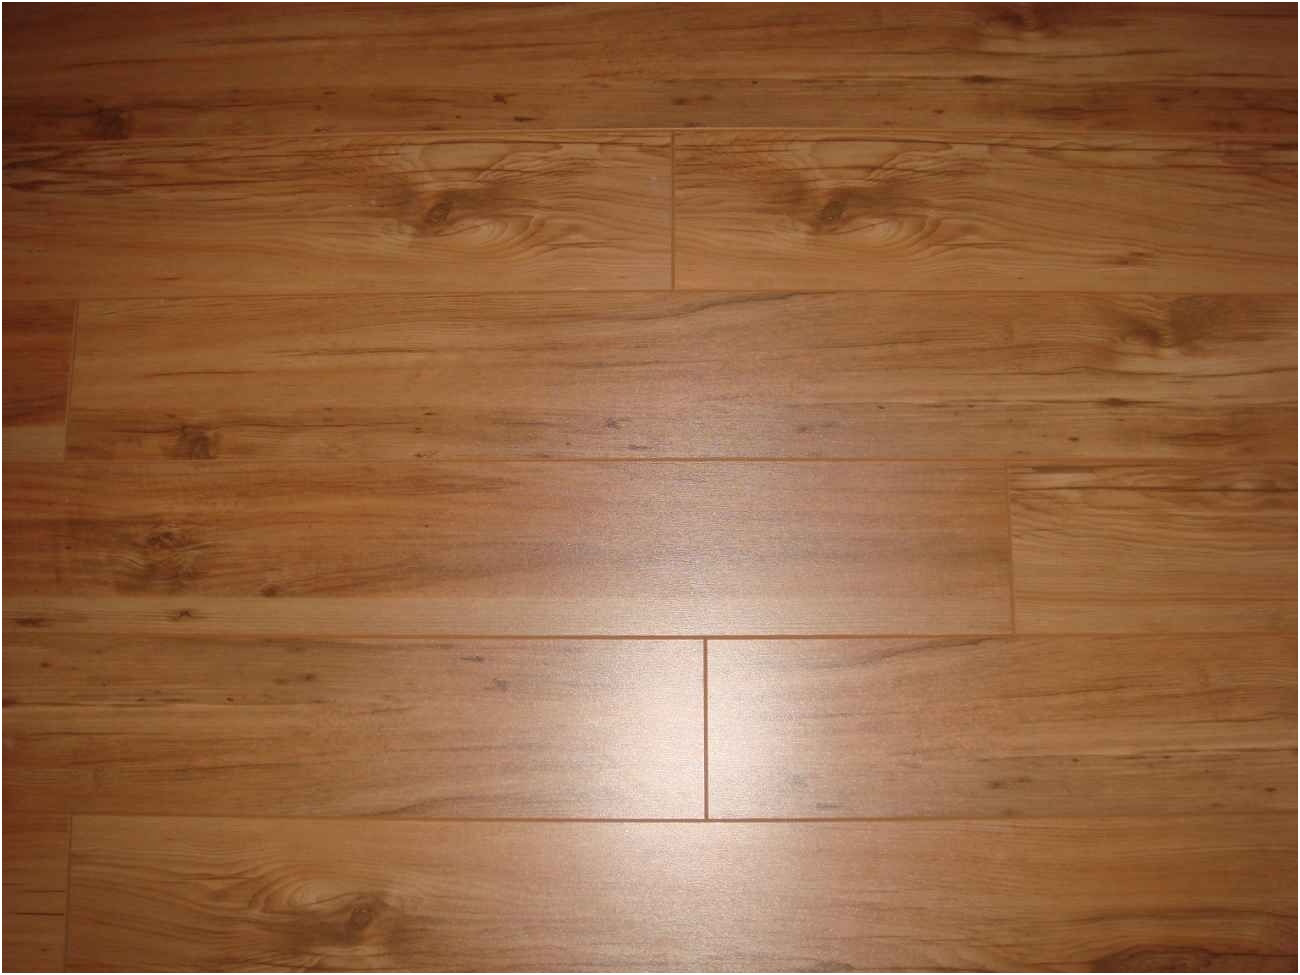 hardwood flooring nearby of hardwood flooring over ceramic tile images how to diagnose and within hardwood flooring over ceramic tile galerie tile that looks like hardwood floors elegant i pinimg 736x